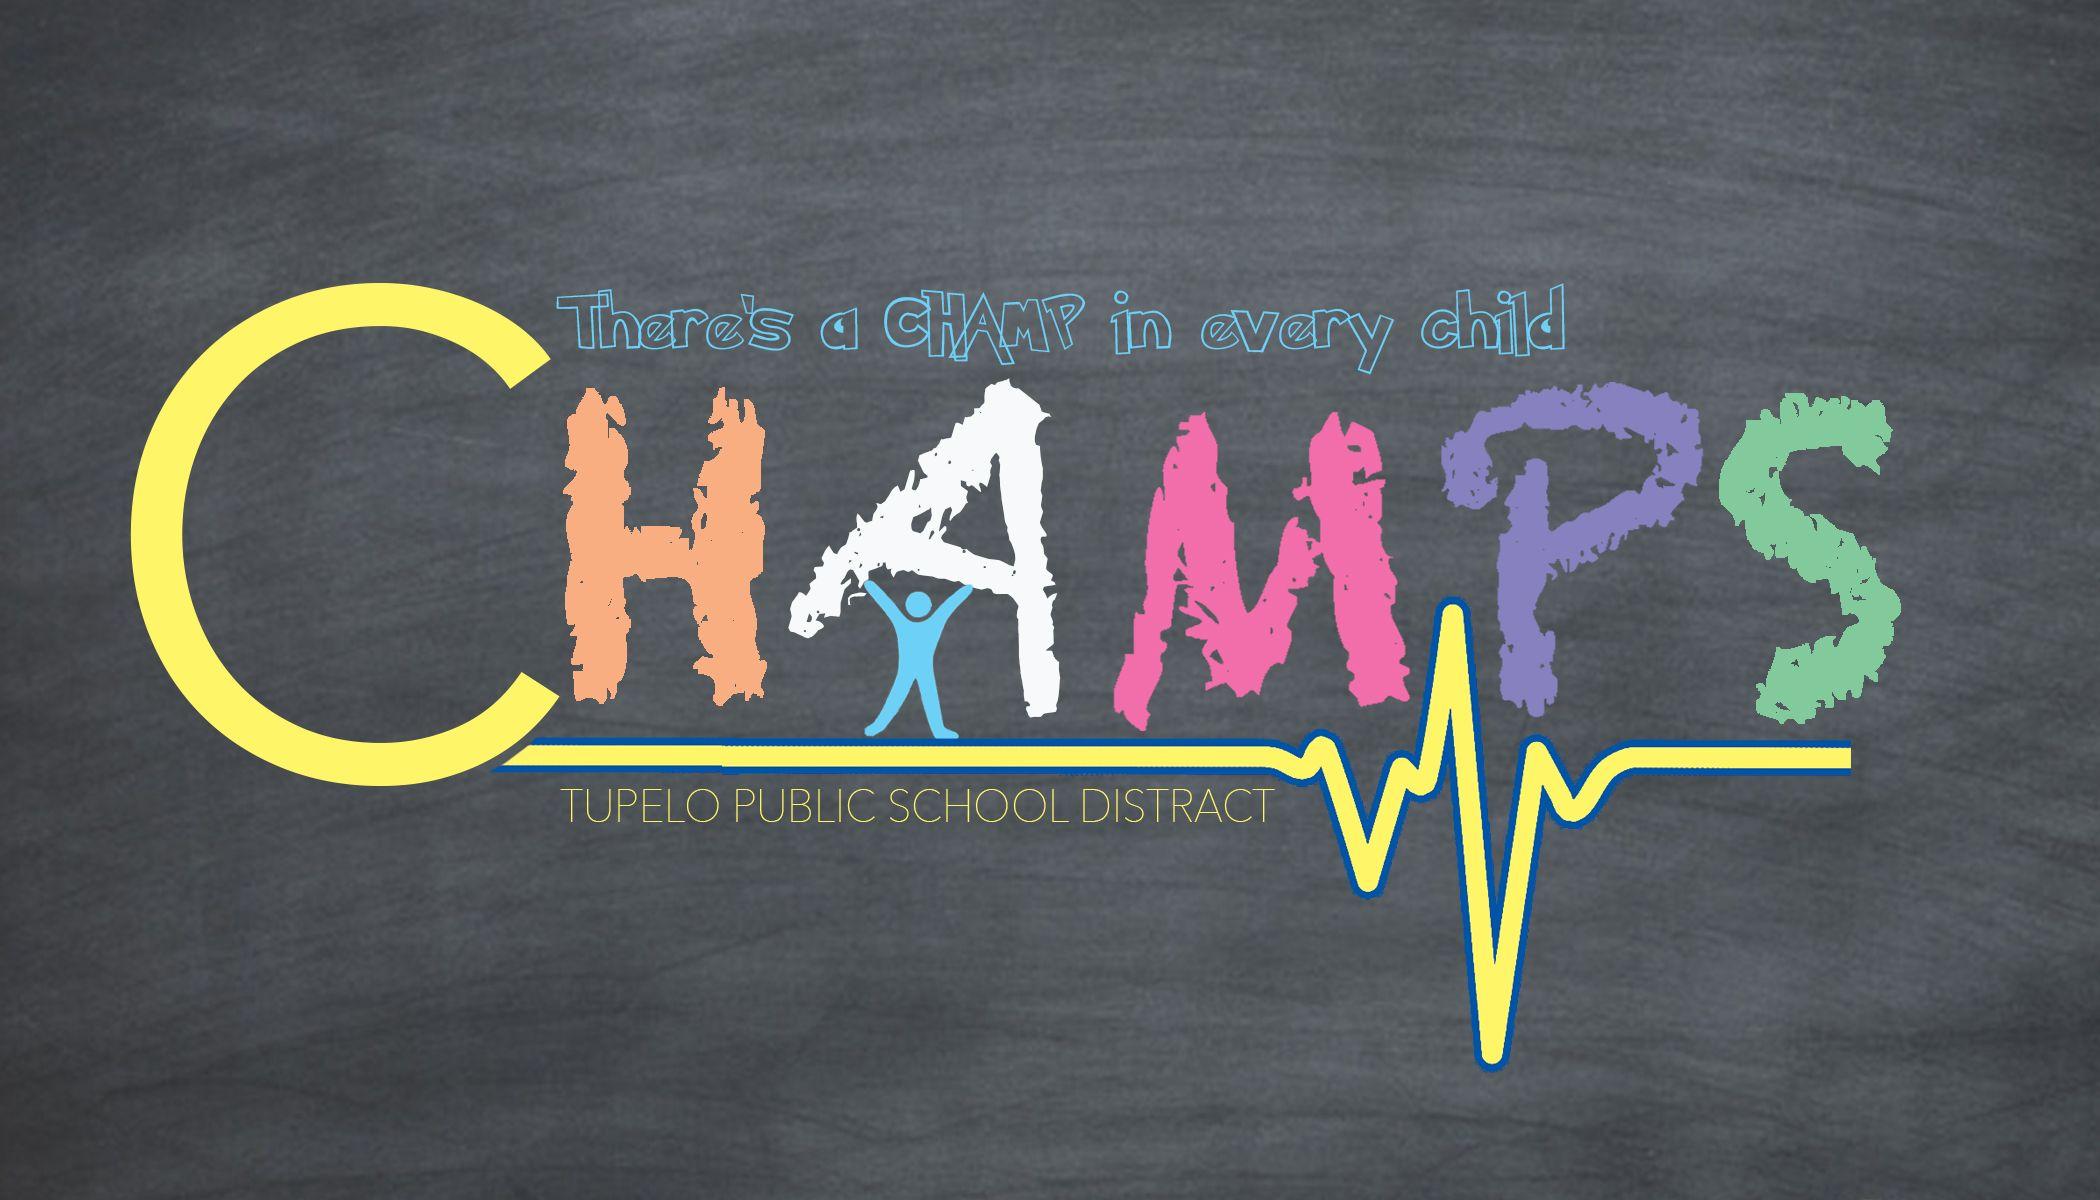 Champs Logo - CHAMPS - Tupelo Public School District